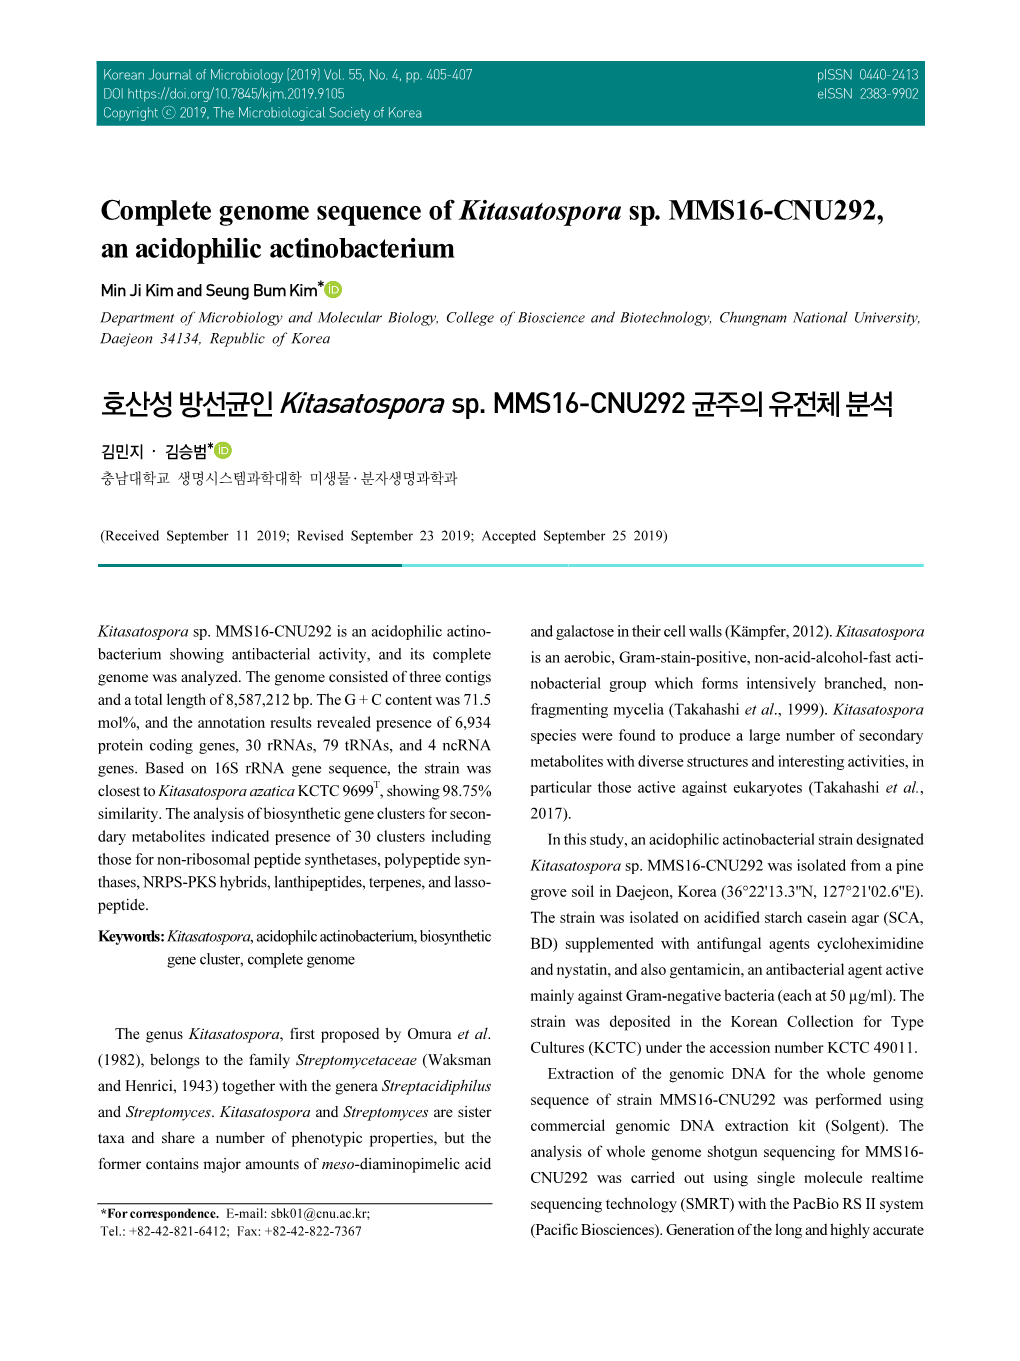 Complete Genome Sequence of Kitasatospora Sp. MMS16-CNU292, an Acidophilic Actinobacterium